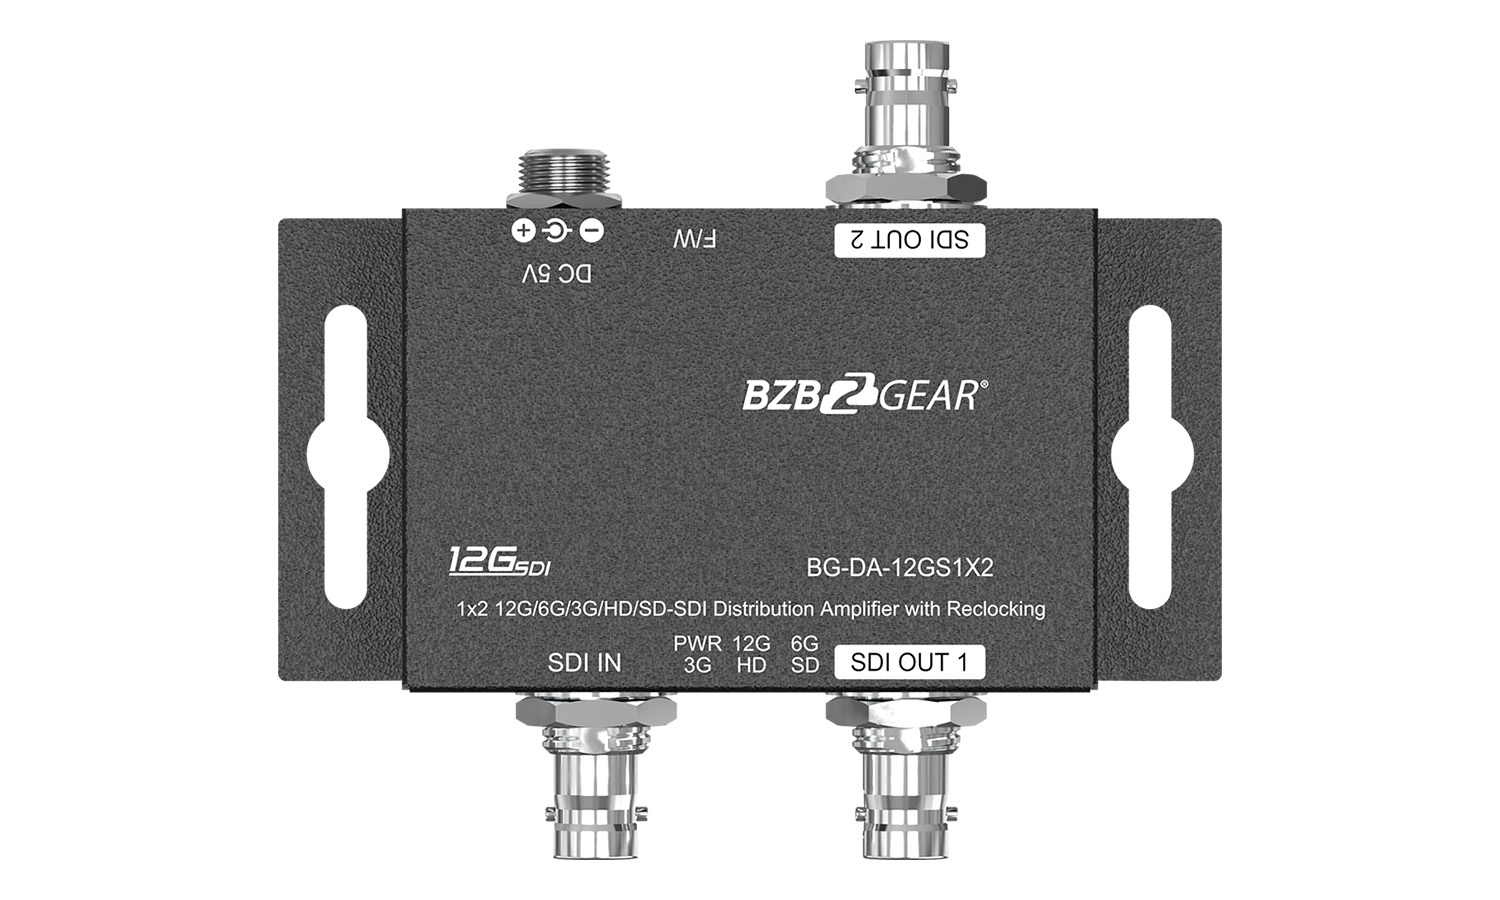 BG-DA-12GS1X2 4K UHD 12G-SDI 1x2 Splitter/Distribution Amplifier by BZBGEAR